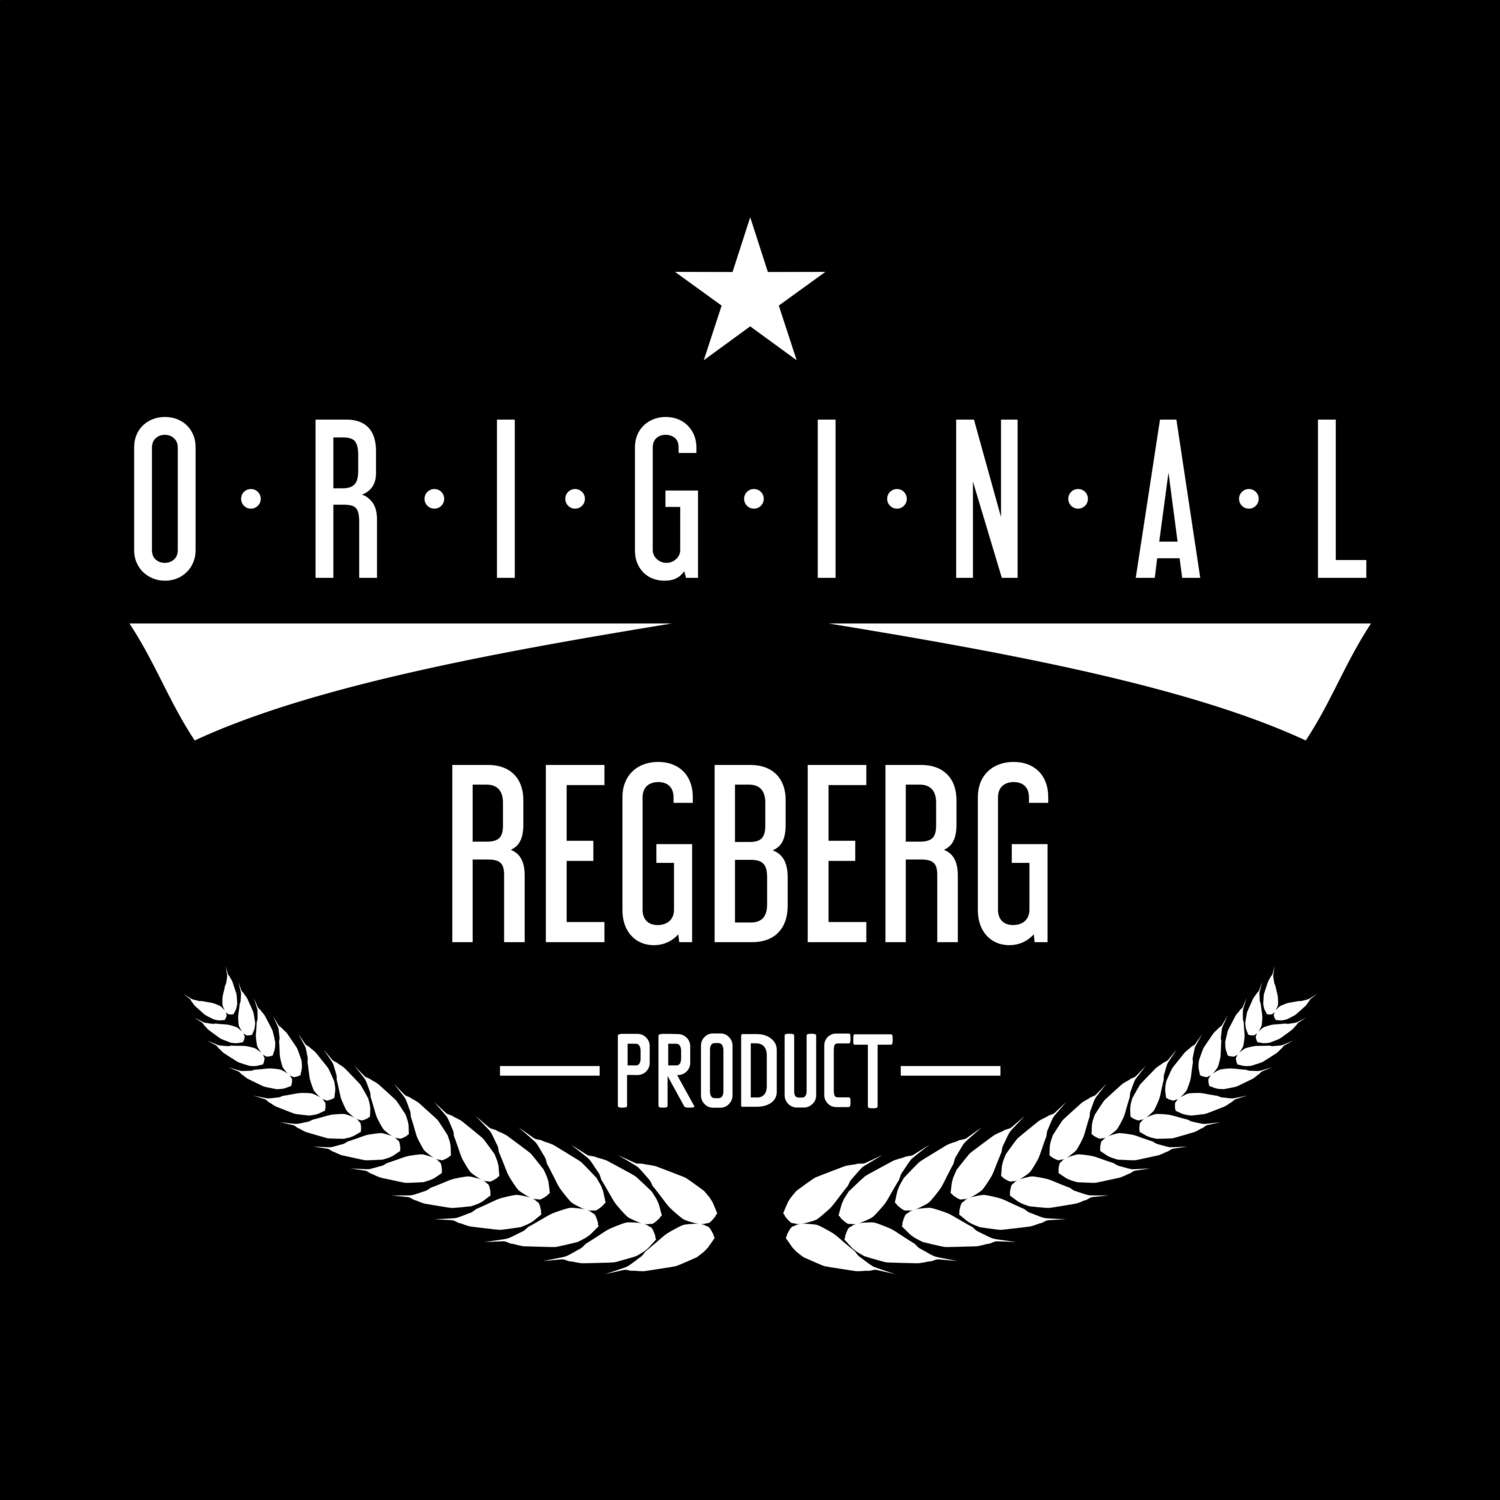 Regberg T-Shirt »Original Product«